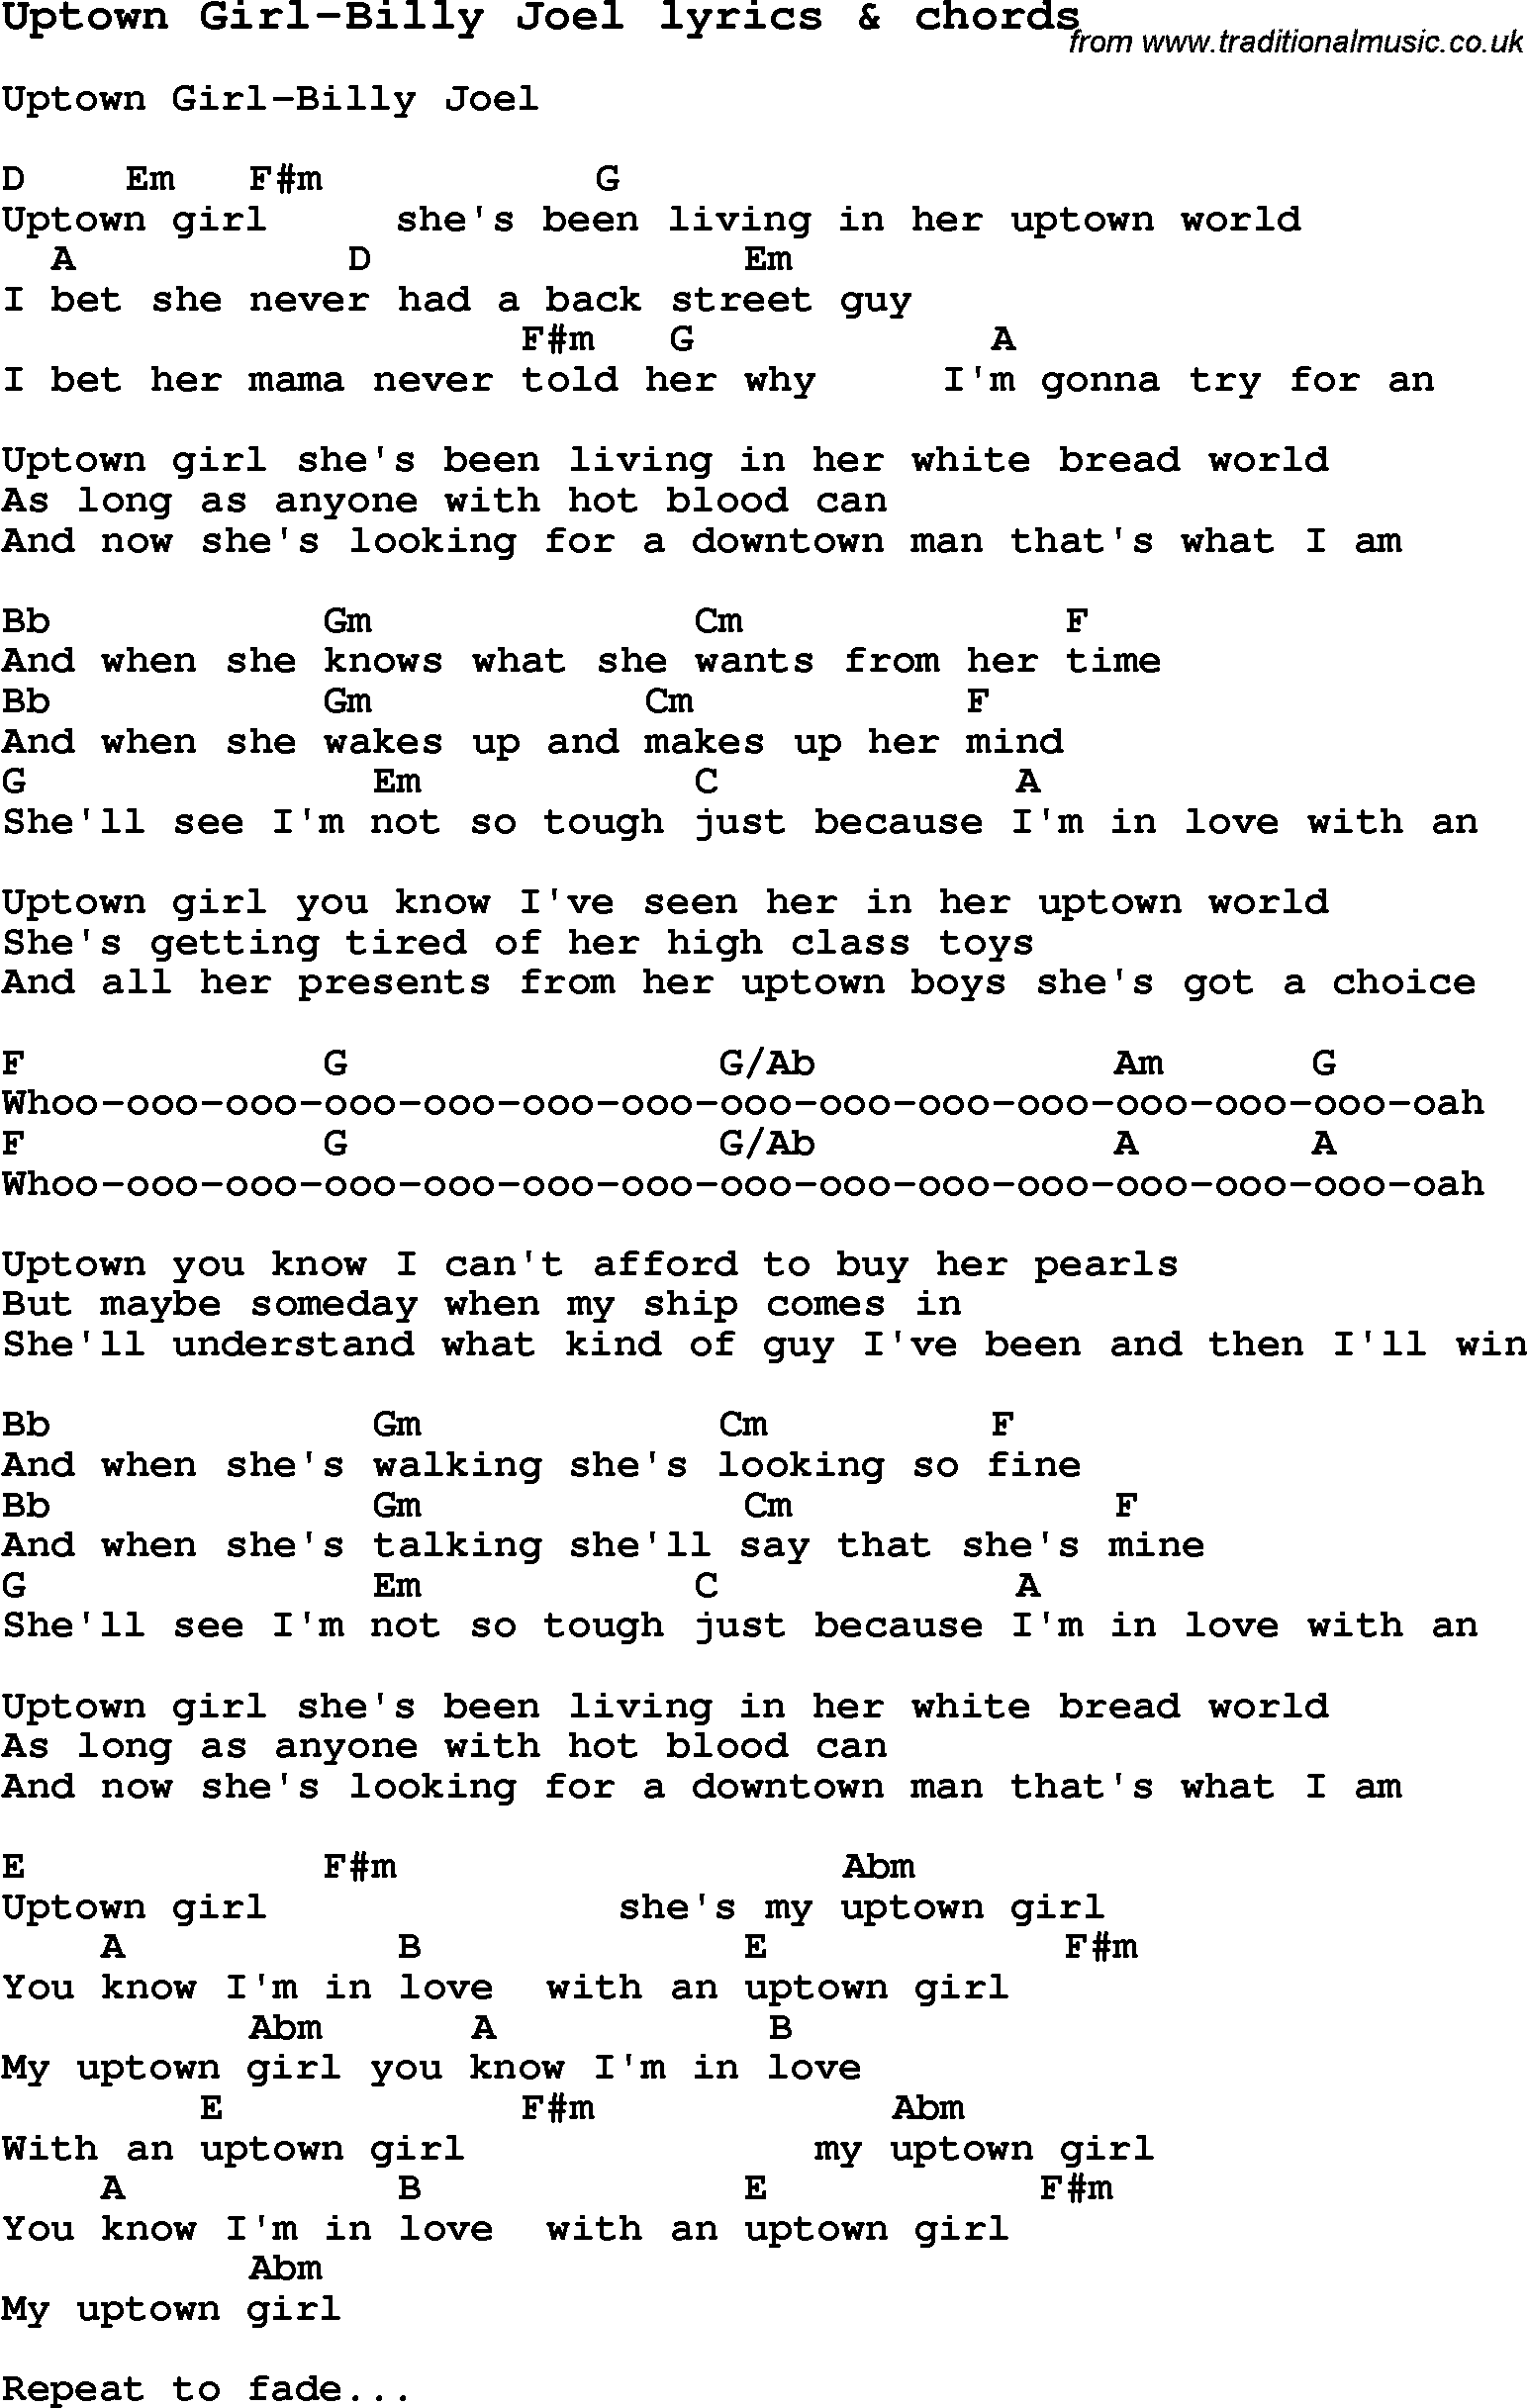 Love Song Lyrics for: Uptown Girl-Billy Joel with chords for Ukulele, Guitar Banjo etc.